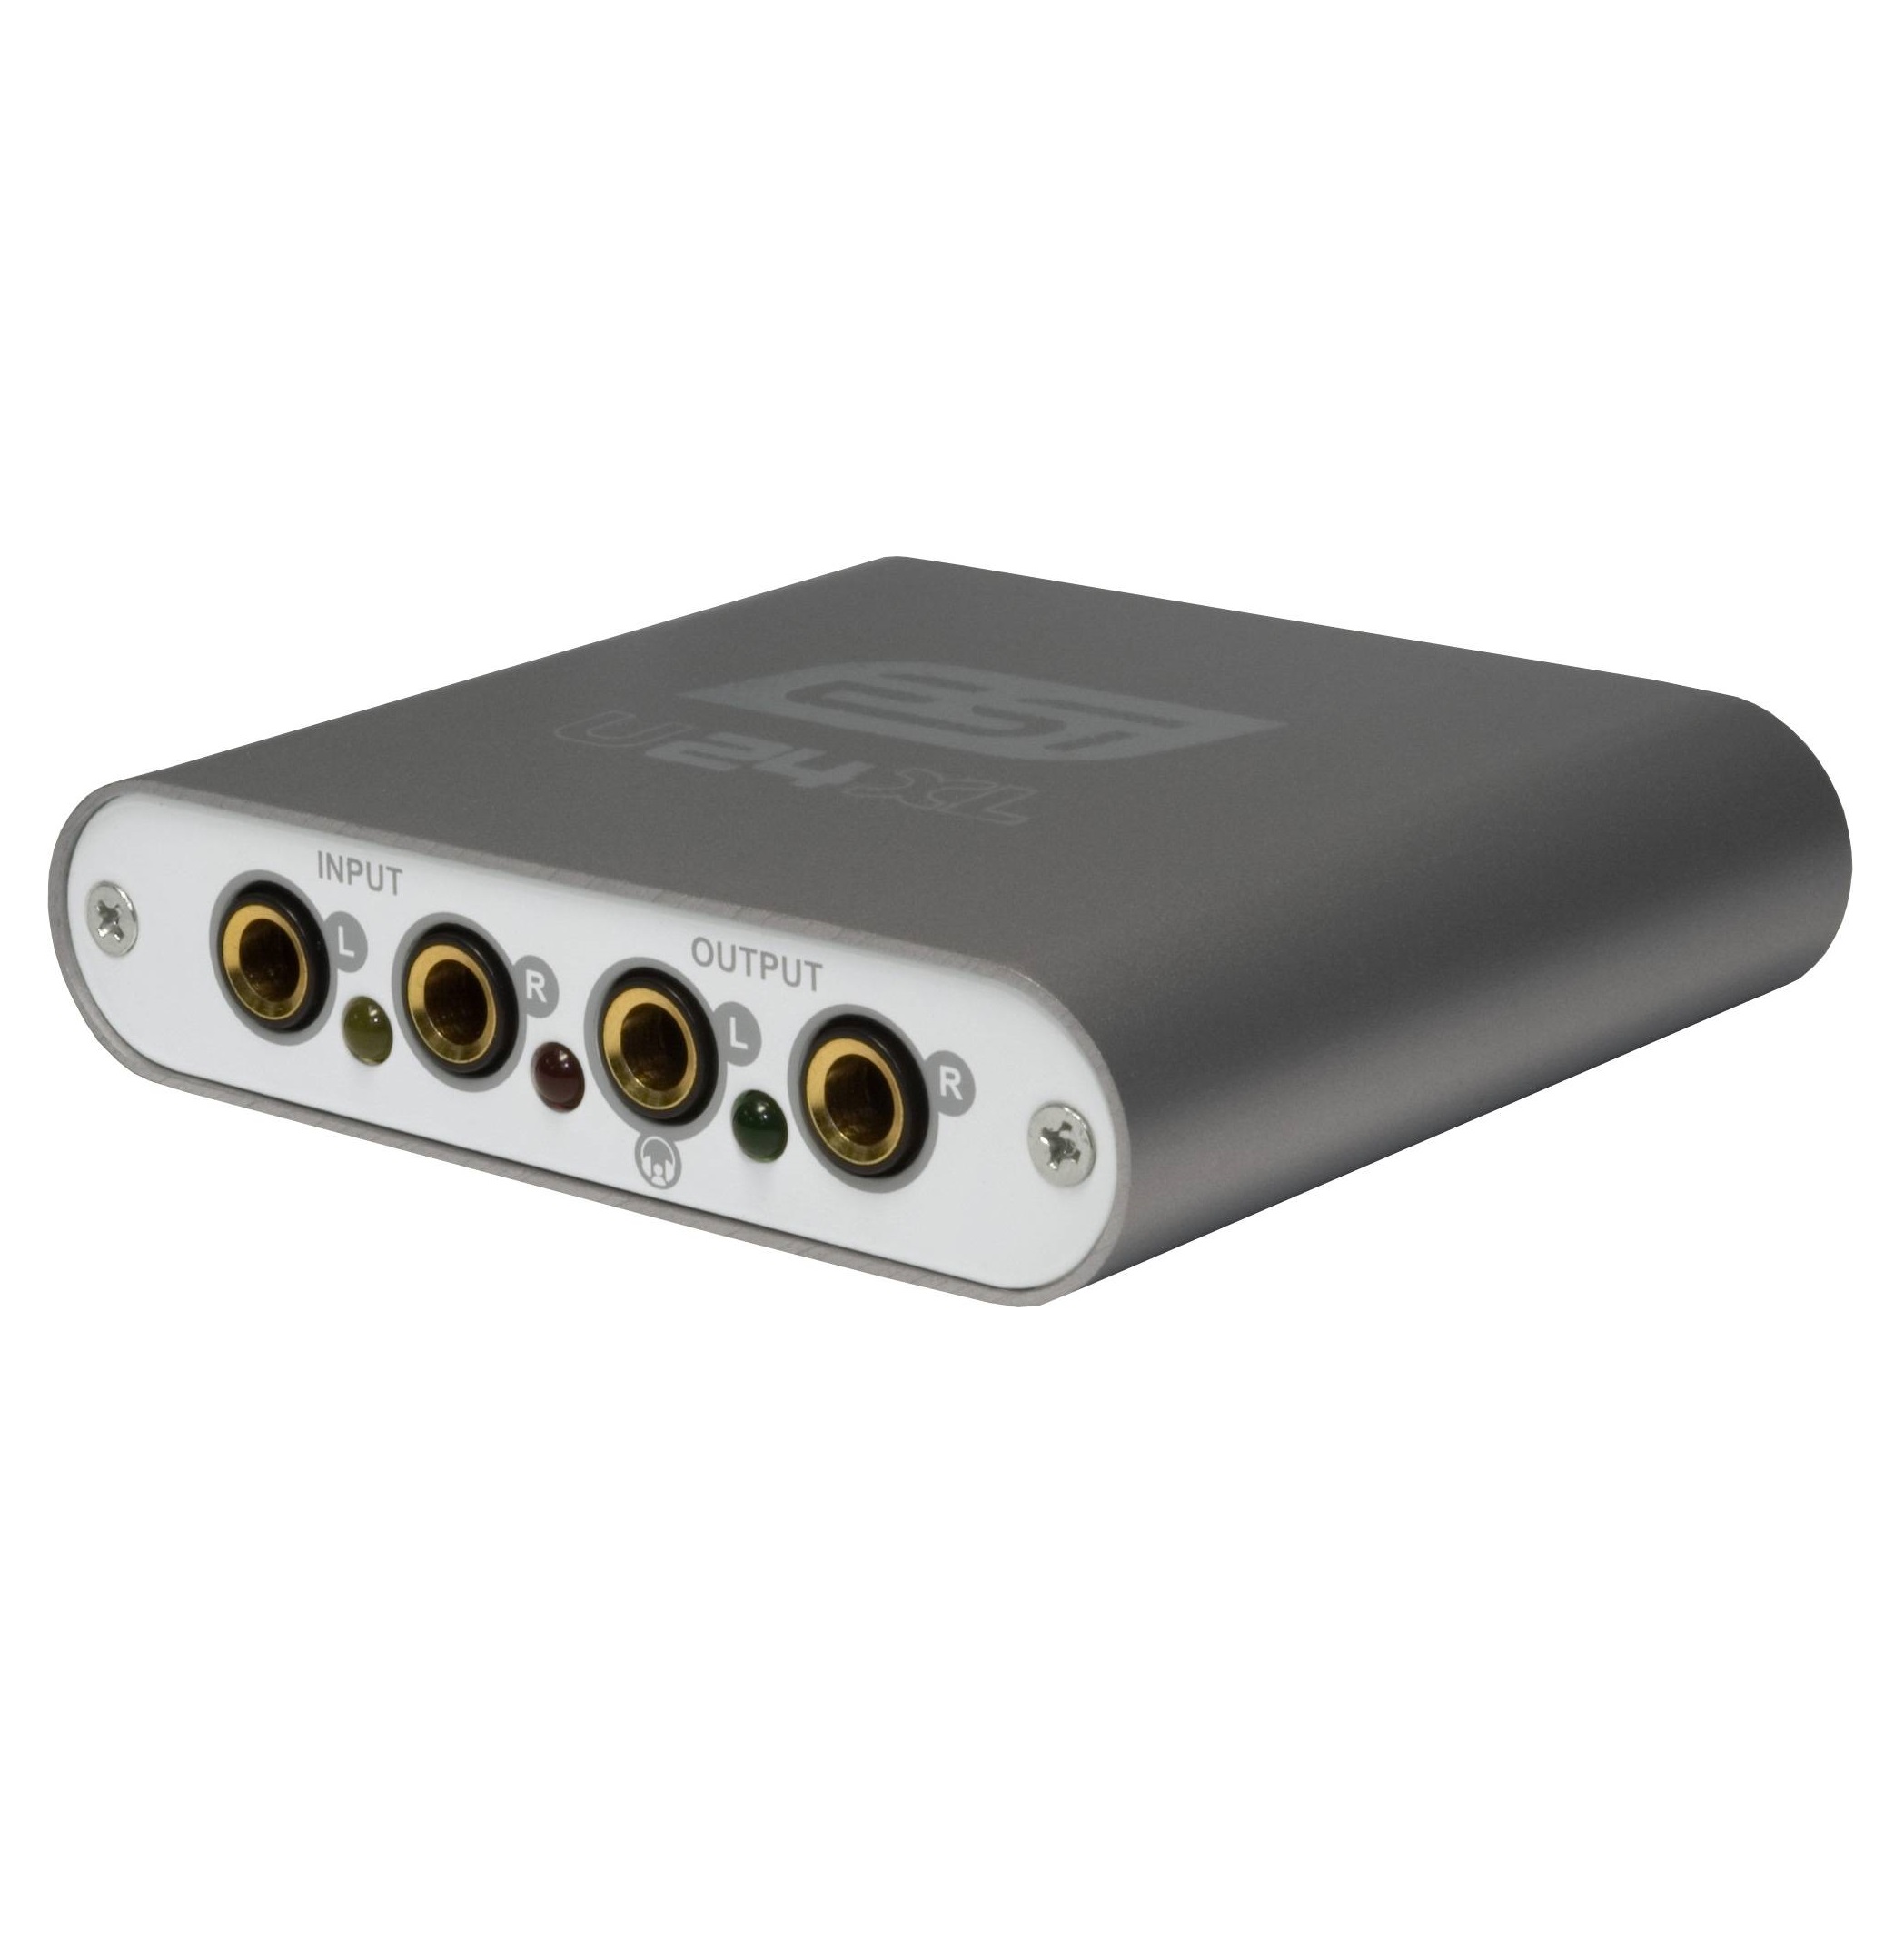 ESI U24 XL Аудиоинтерфейс USB 4х4, аналог 2х2, наушники, S/PDIF (opt/coax)